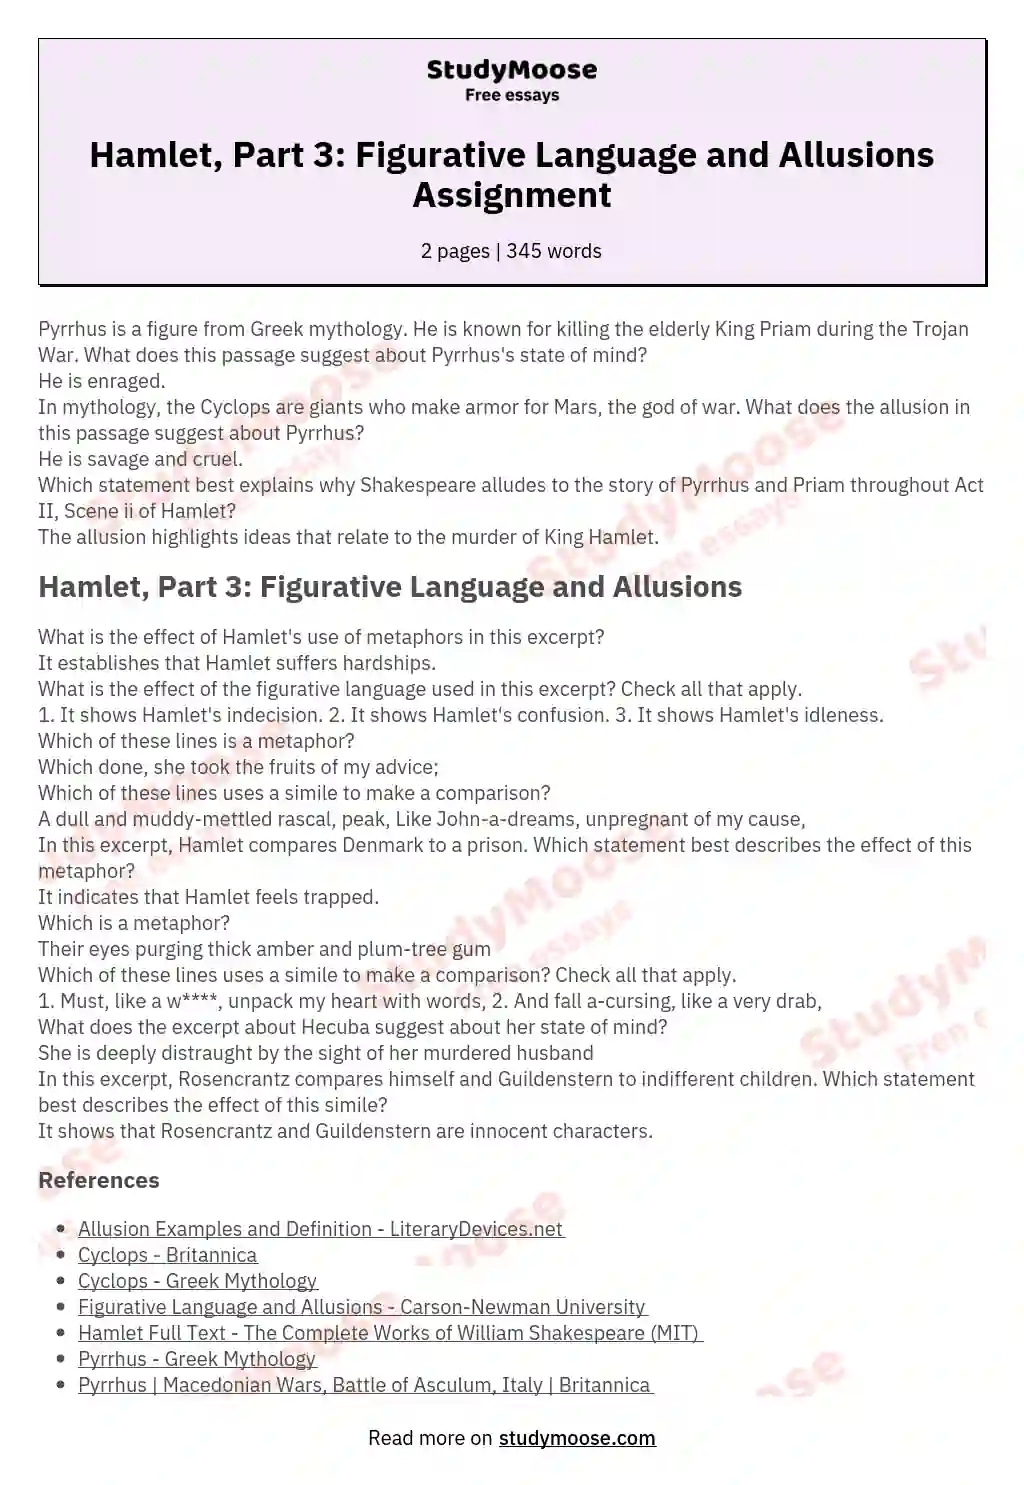 Hamlet, Part 3: Figurative Language and Allusions Assignment essay